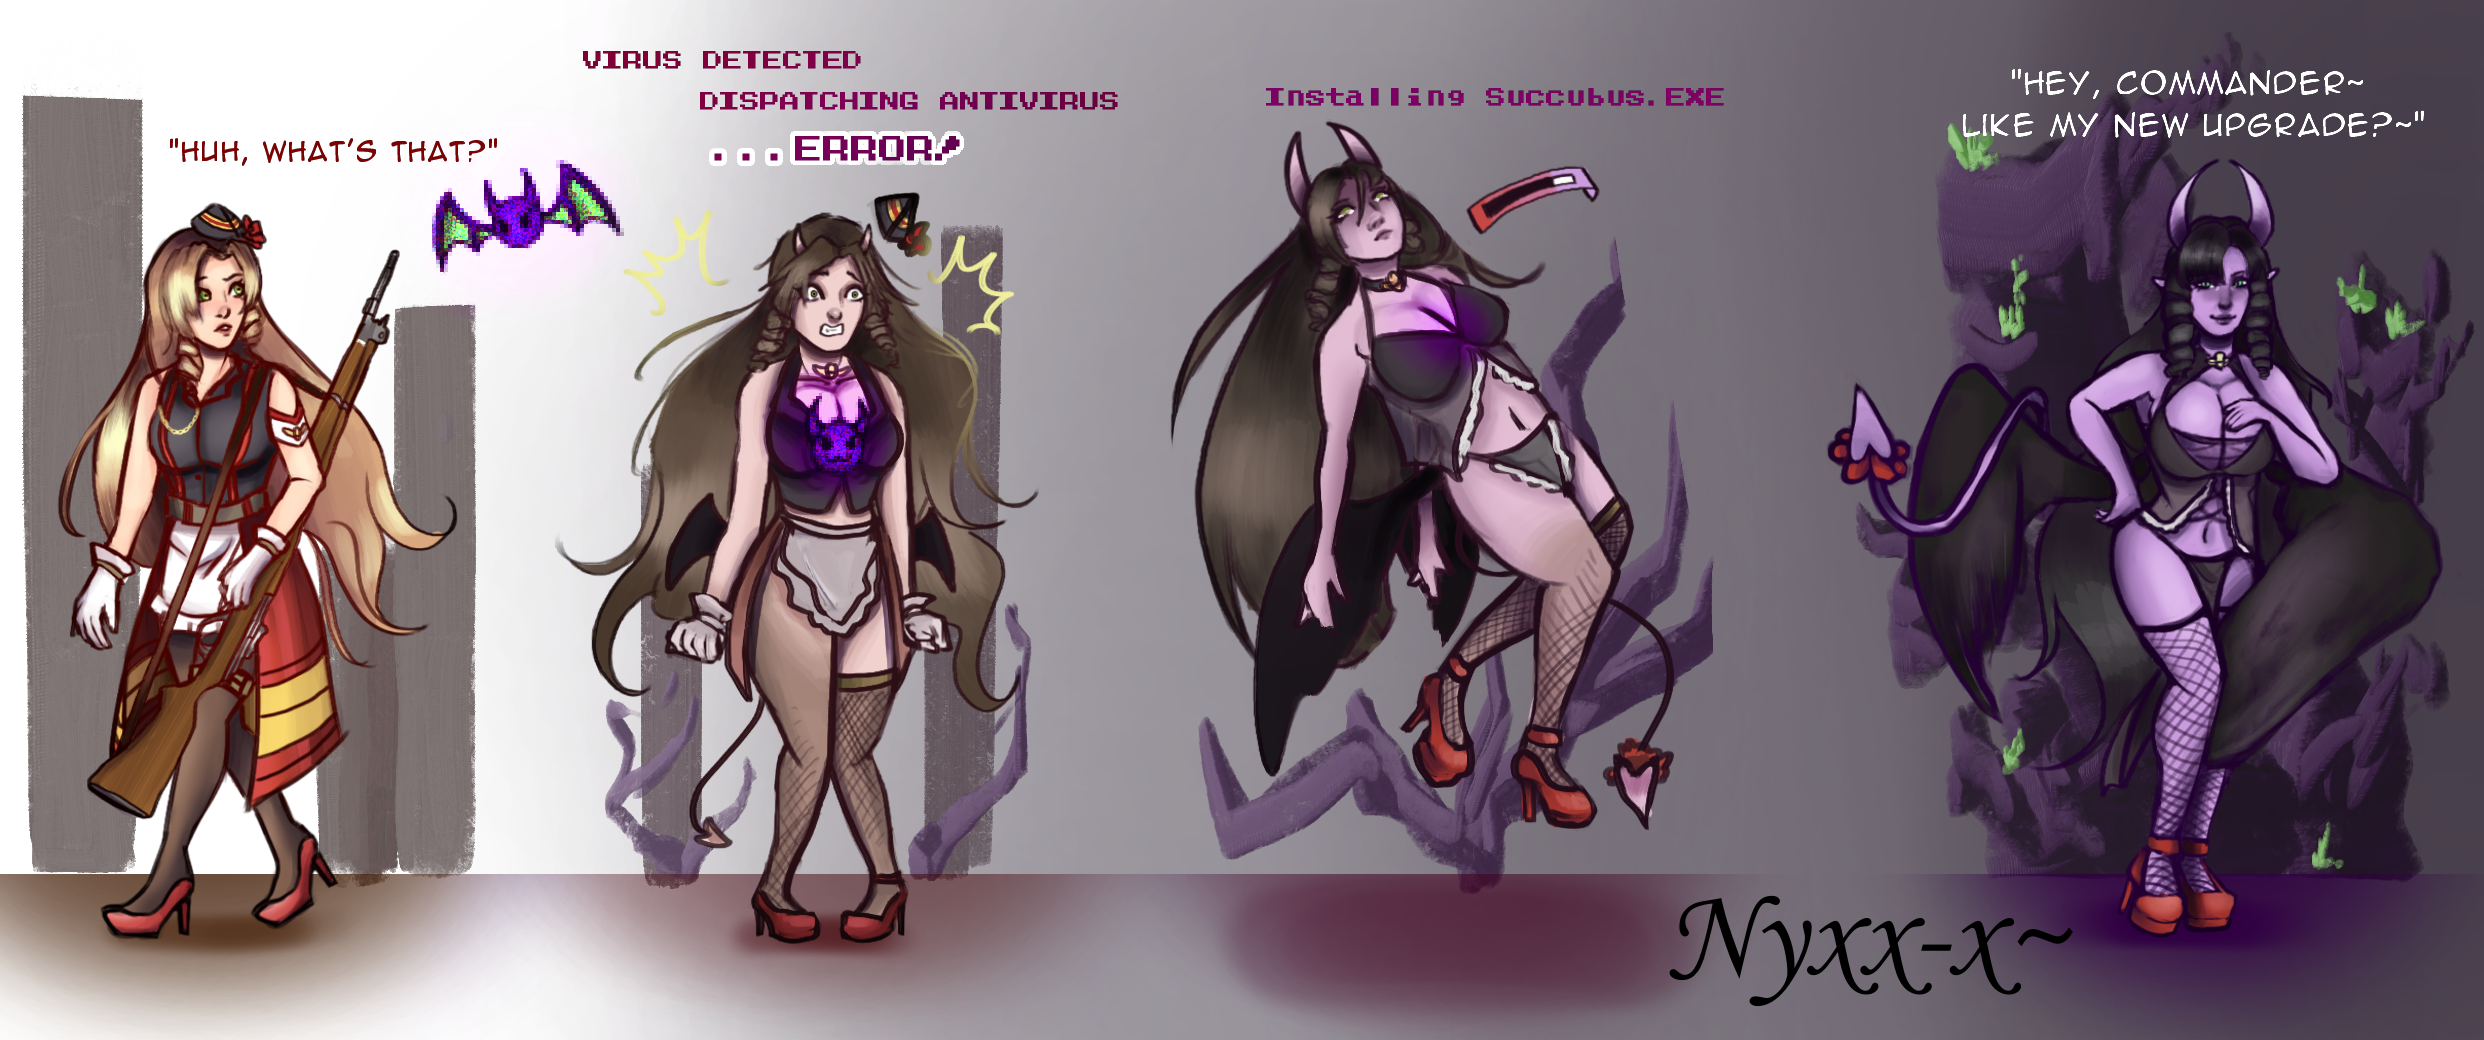 high heels, horns, large breasts, nyxx-x, purple skin, succubus, transforma...